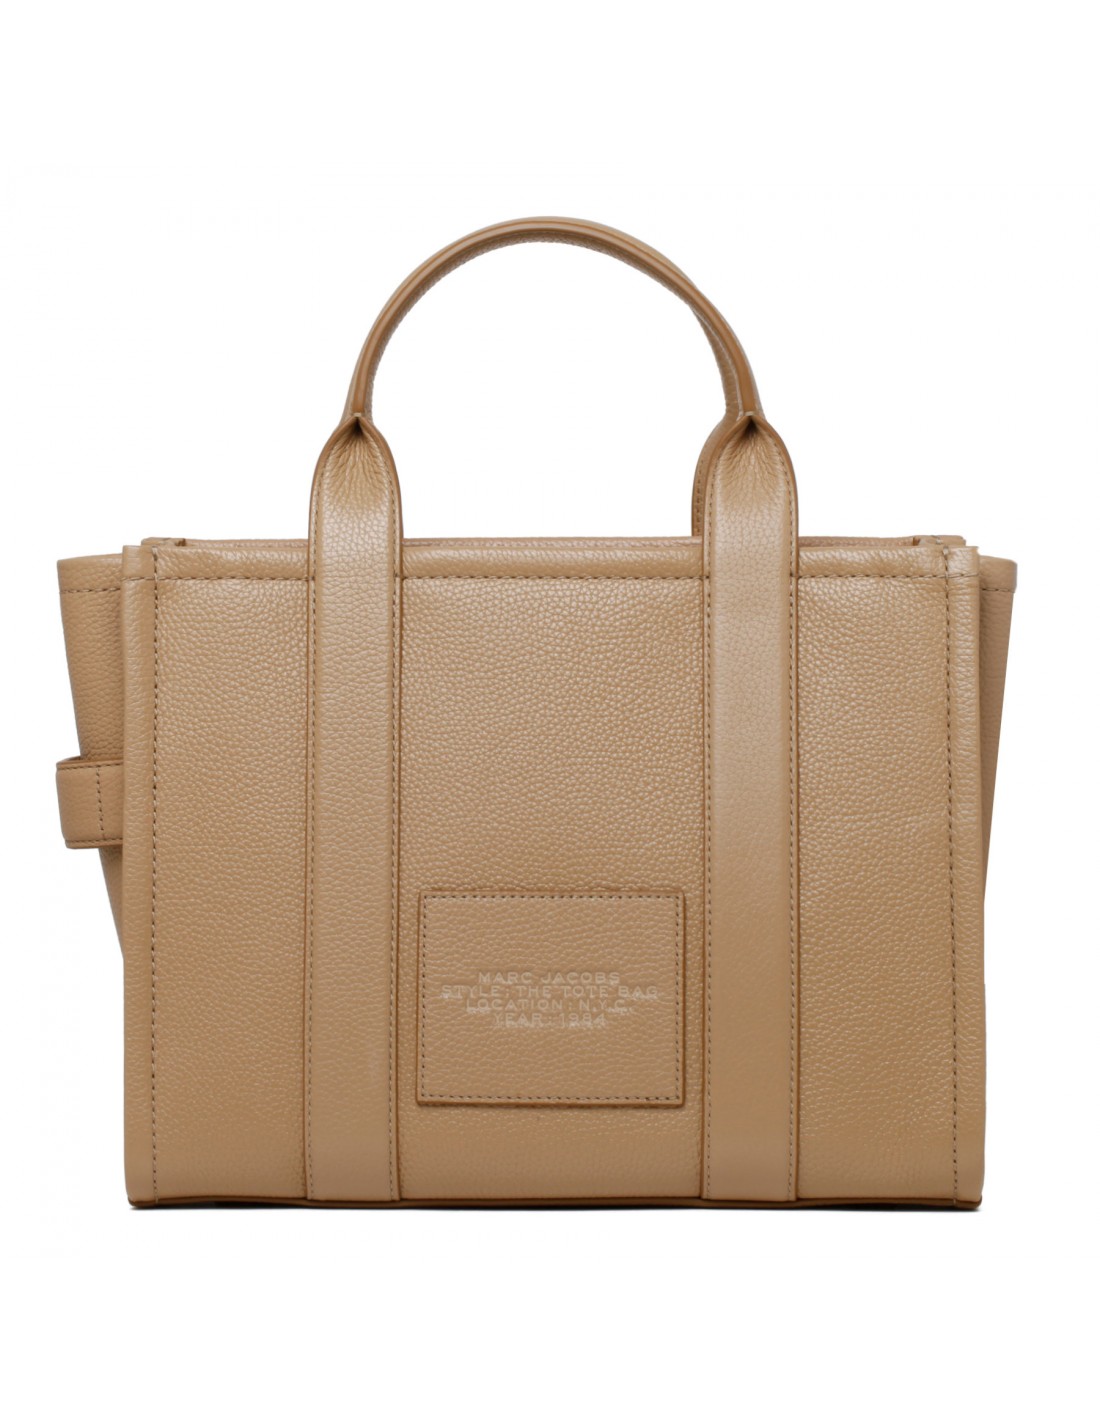 The leather medium tote bag